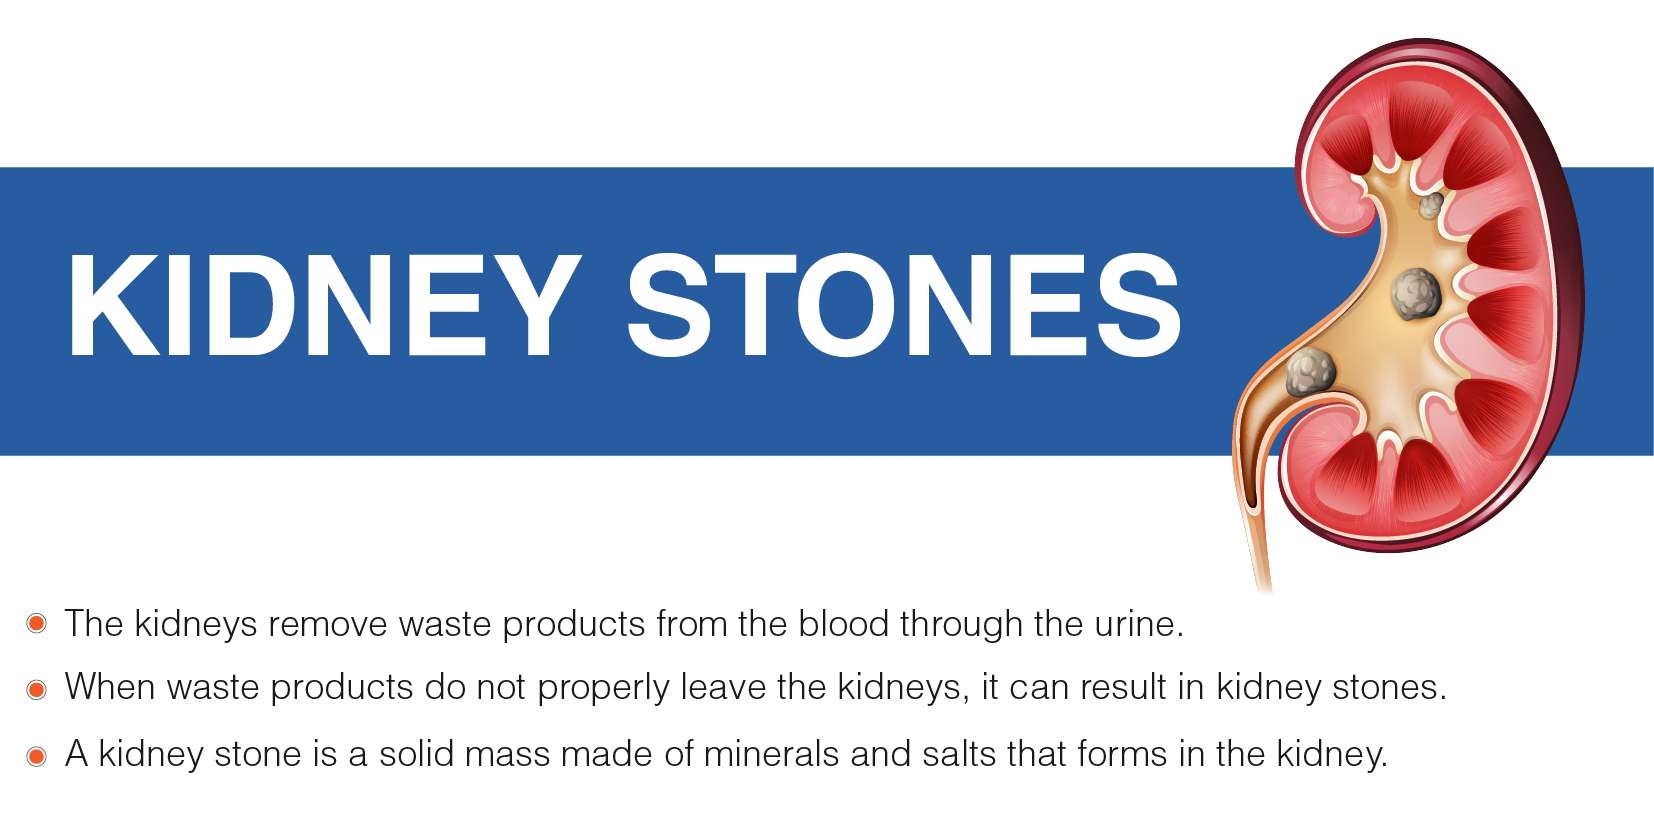 Overview of Kidney Stones